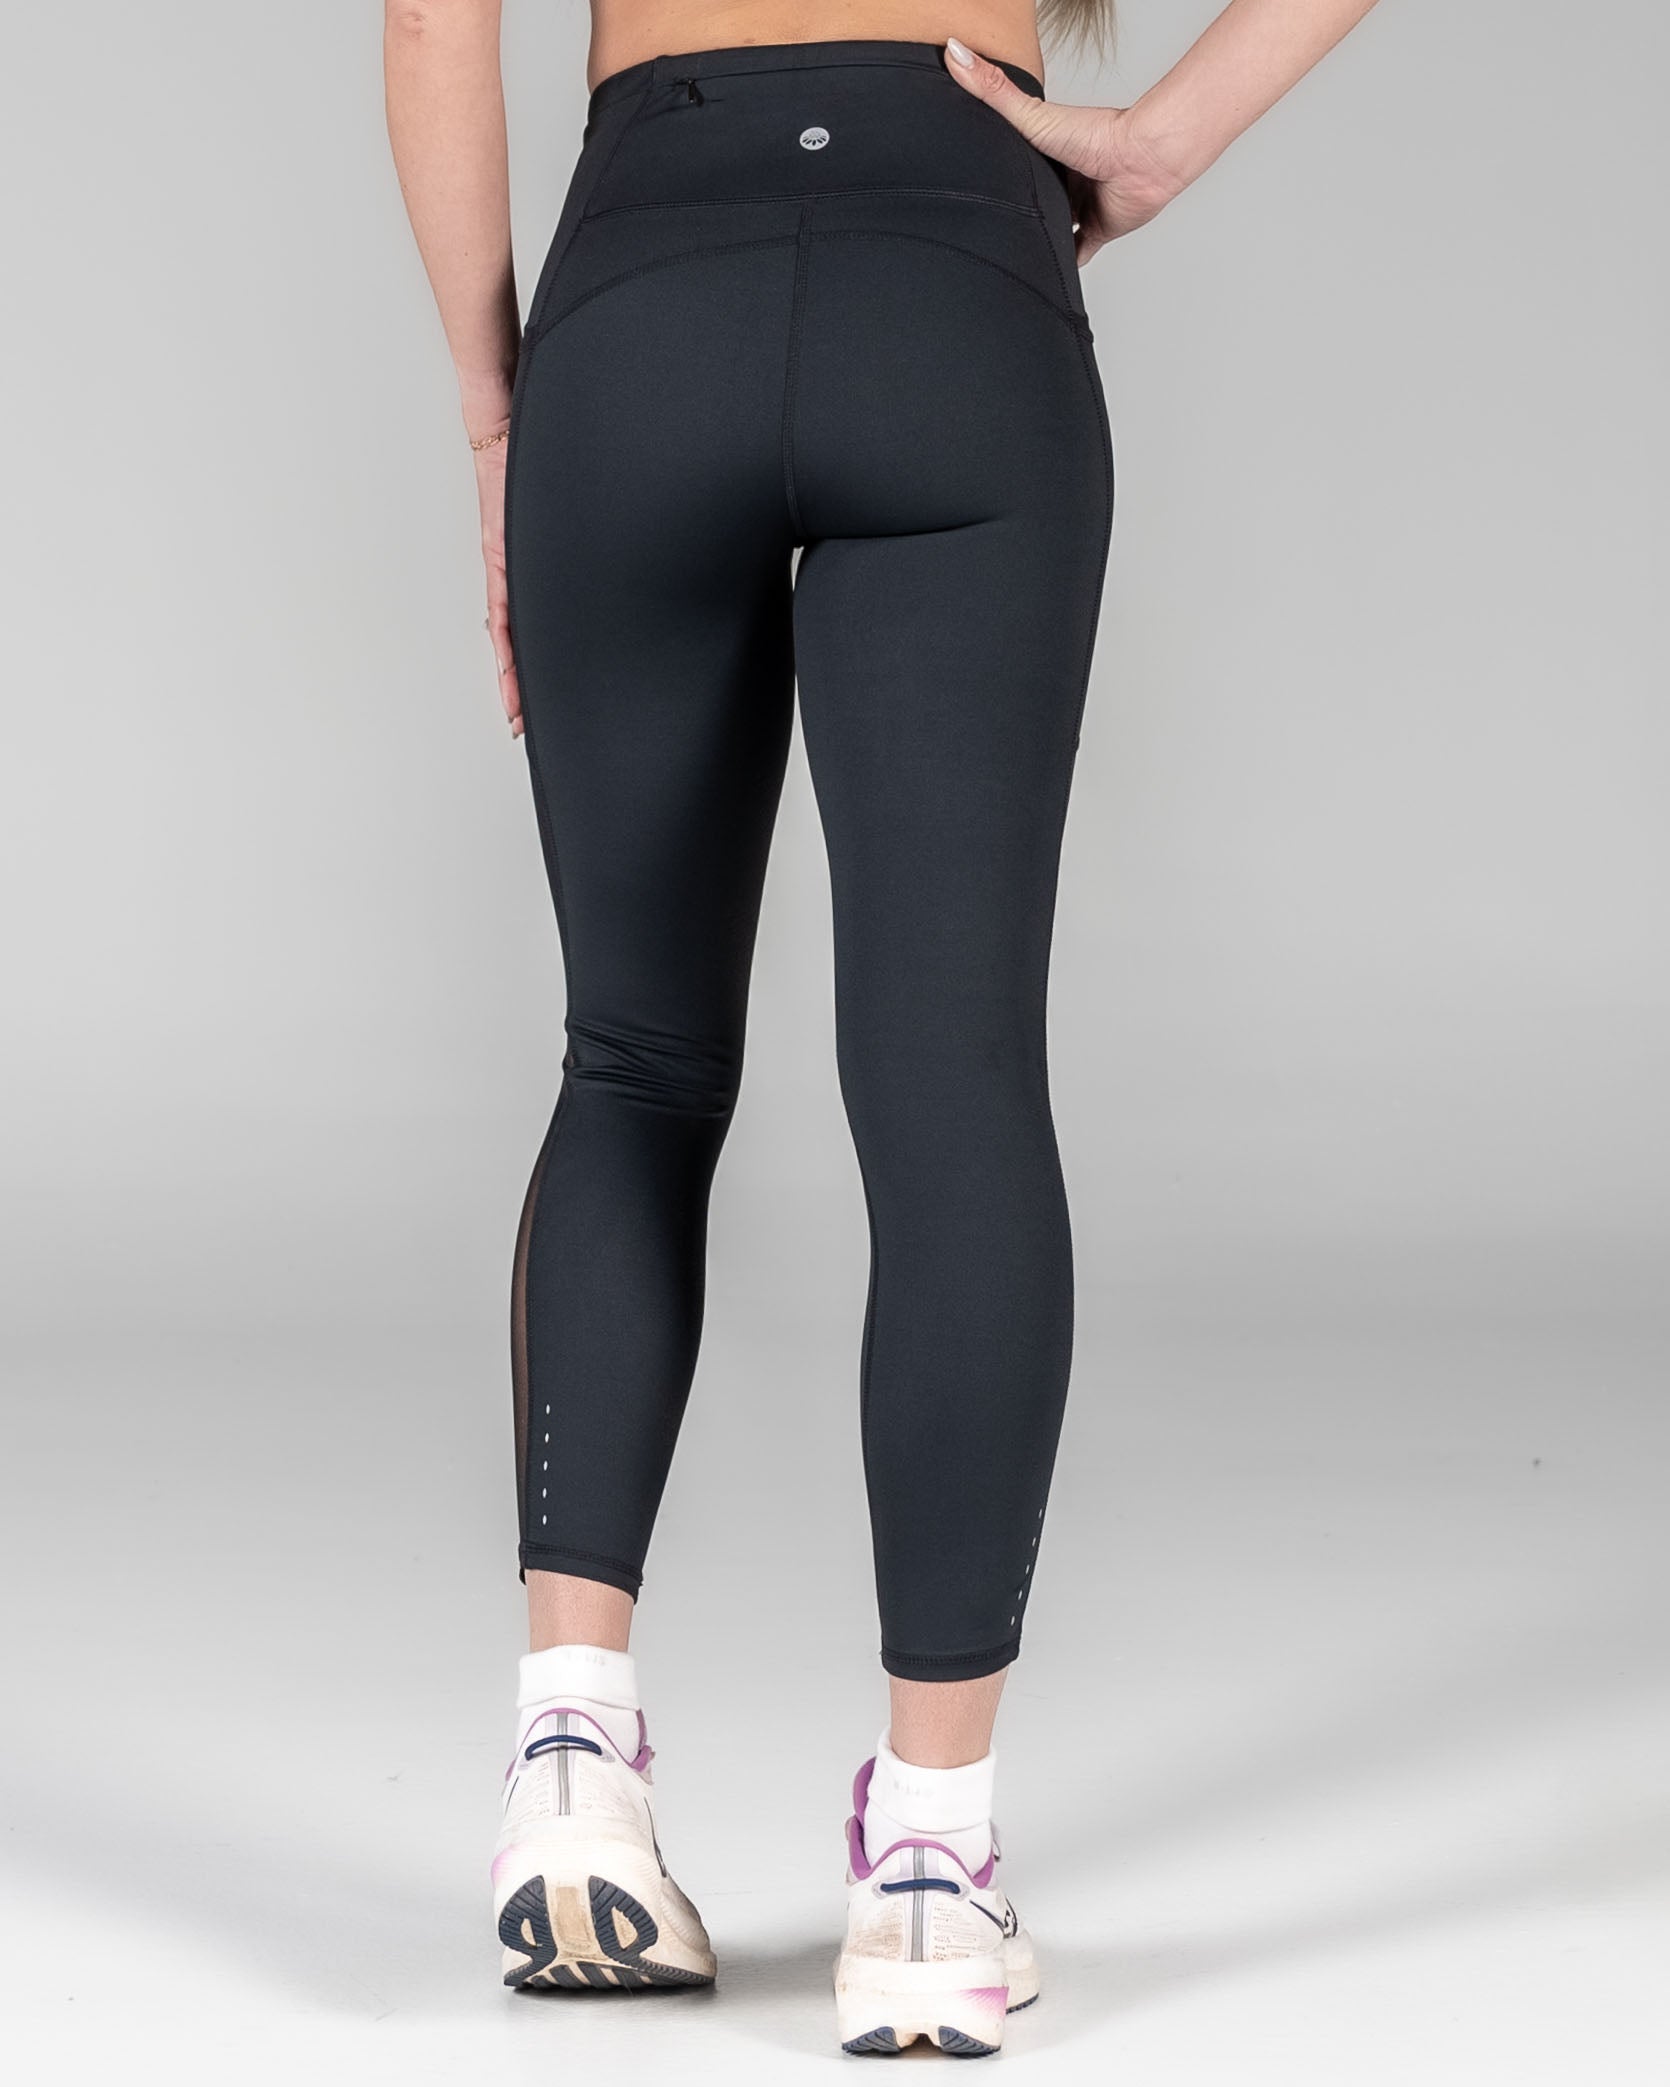 Senita Madelyn Black Workout Leggings Size XS Mesh Panels High